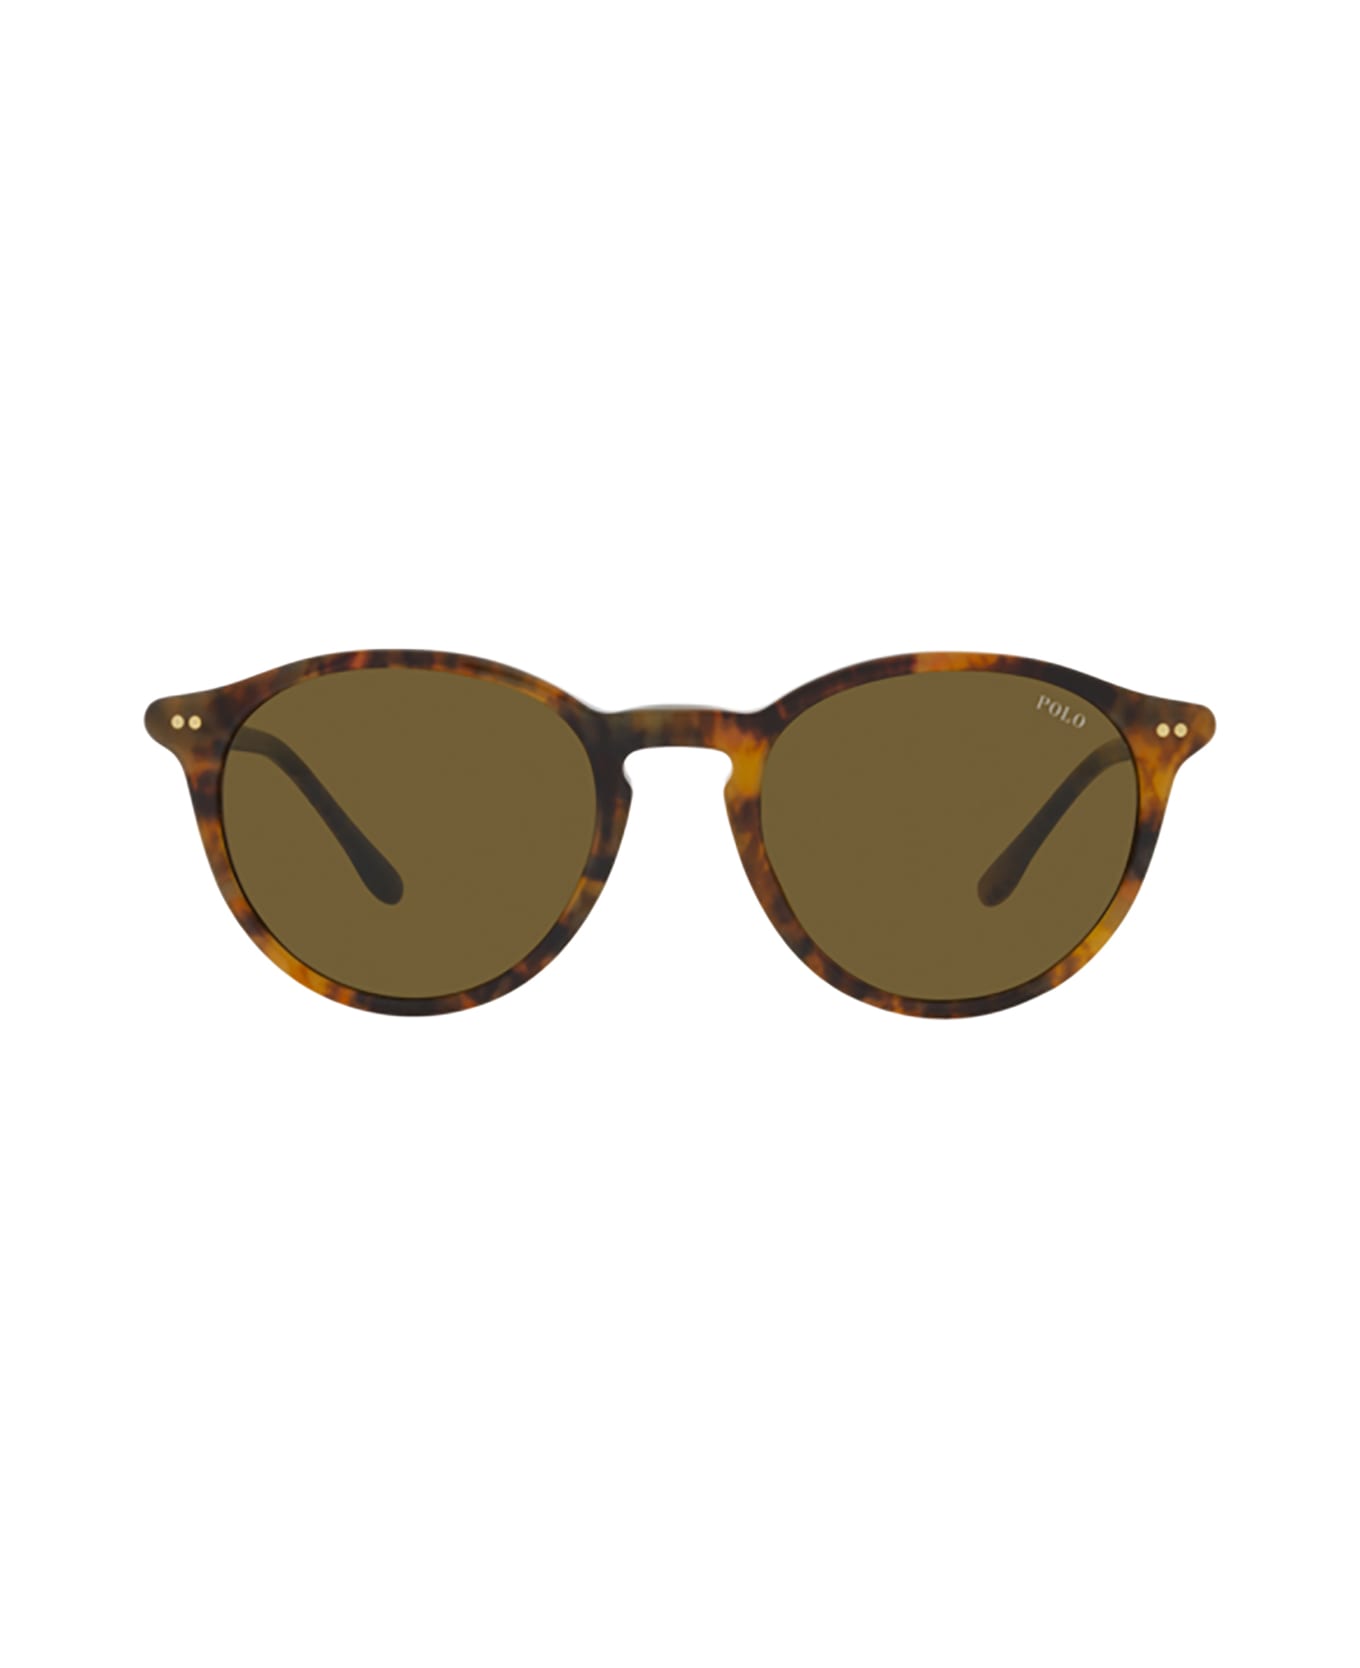 Polo Ralph Lauren Ph4193 Shiny Beige Tortoise Sunglasses - Shiny Beige Tortoise